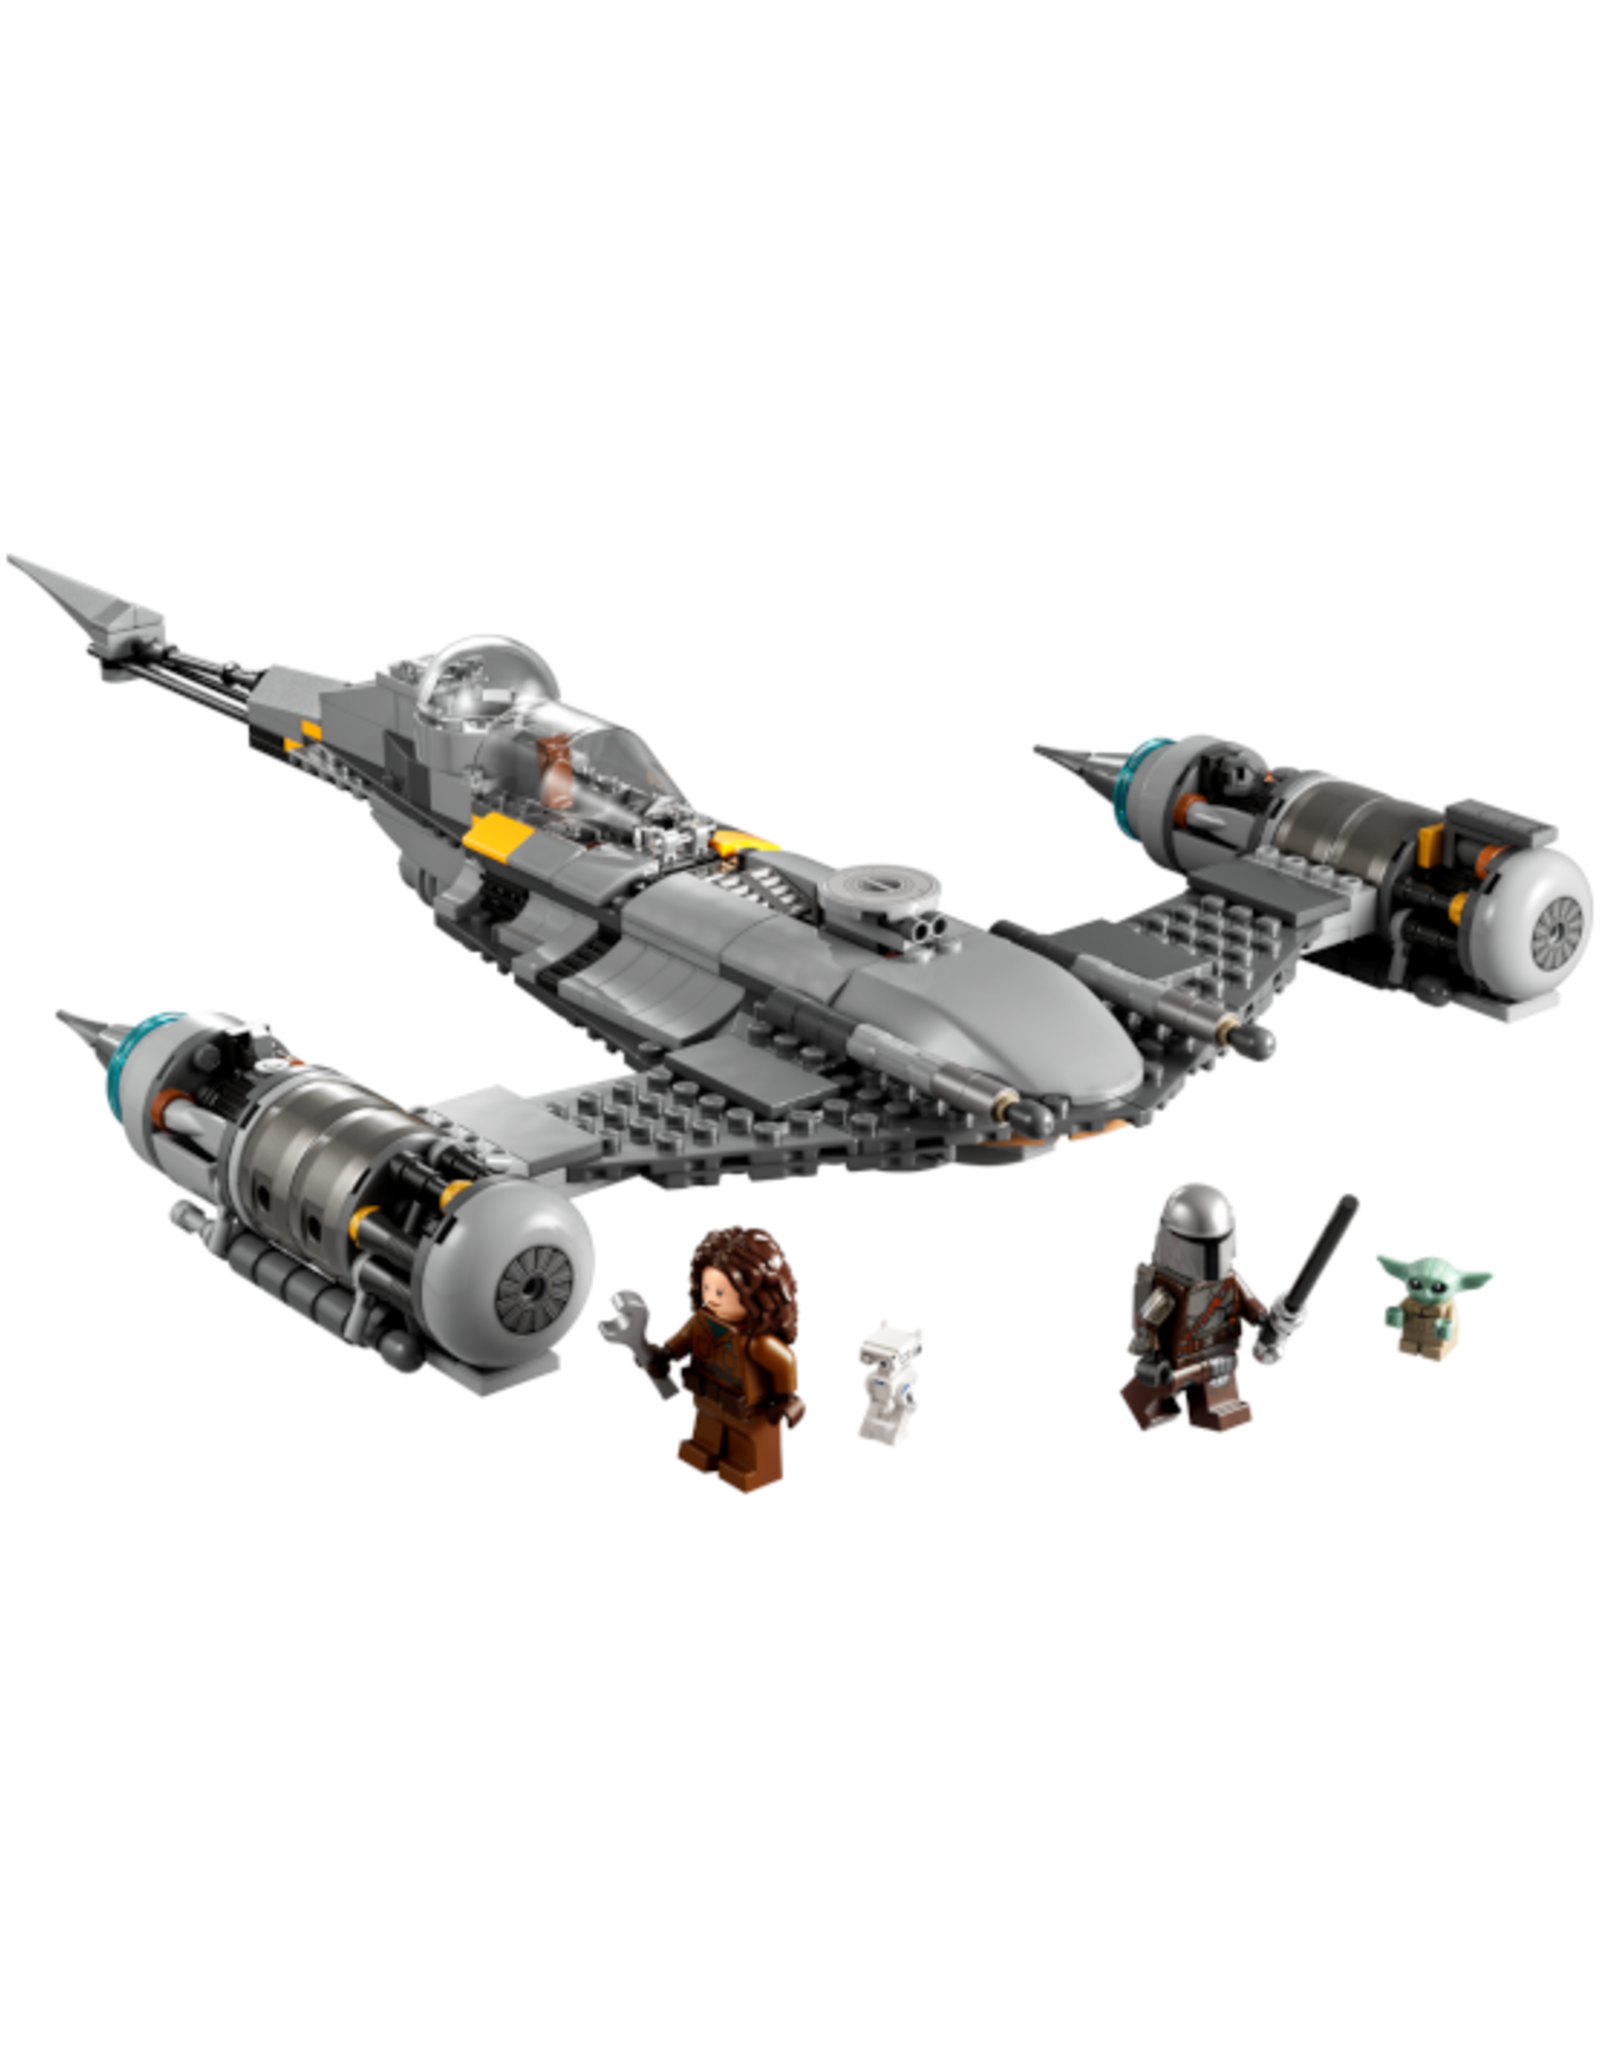 Lego Lego - Star Wars - 75325 - The Mandalorian's N-1 Starfighter